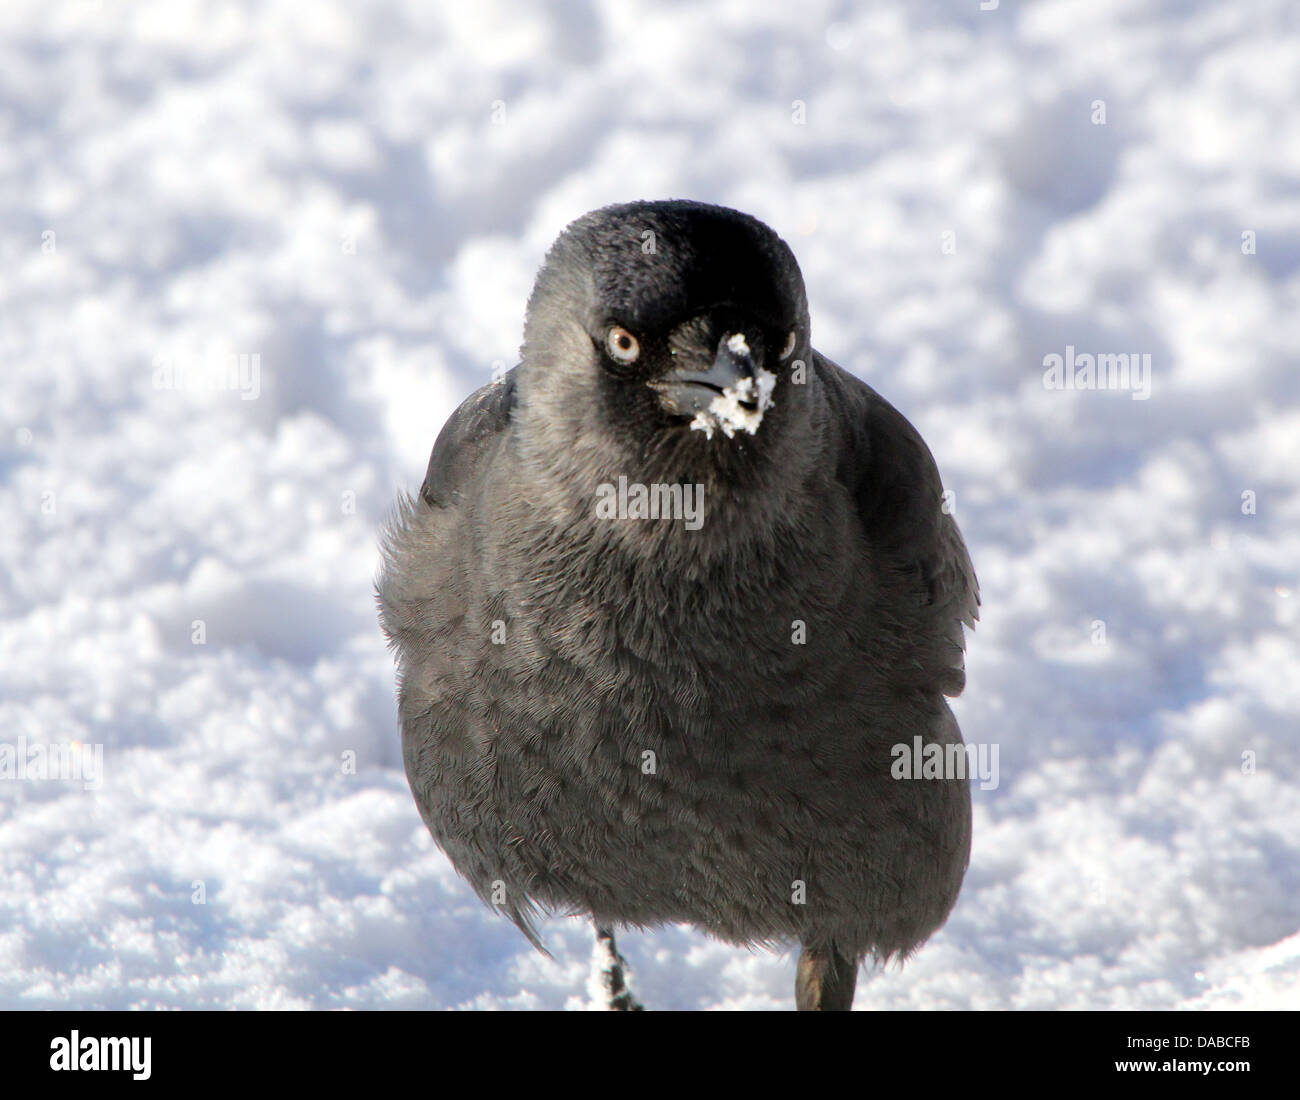 Jackdaw européenne (Corvus monedula) de nourriture dans la neige en hiver Banque D'Images